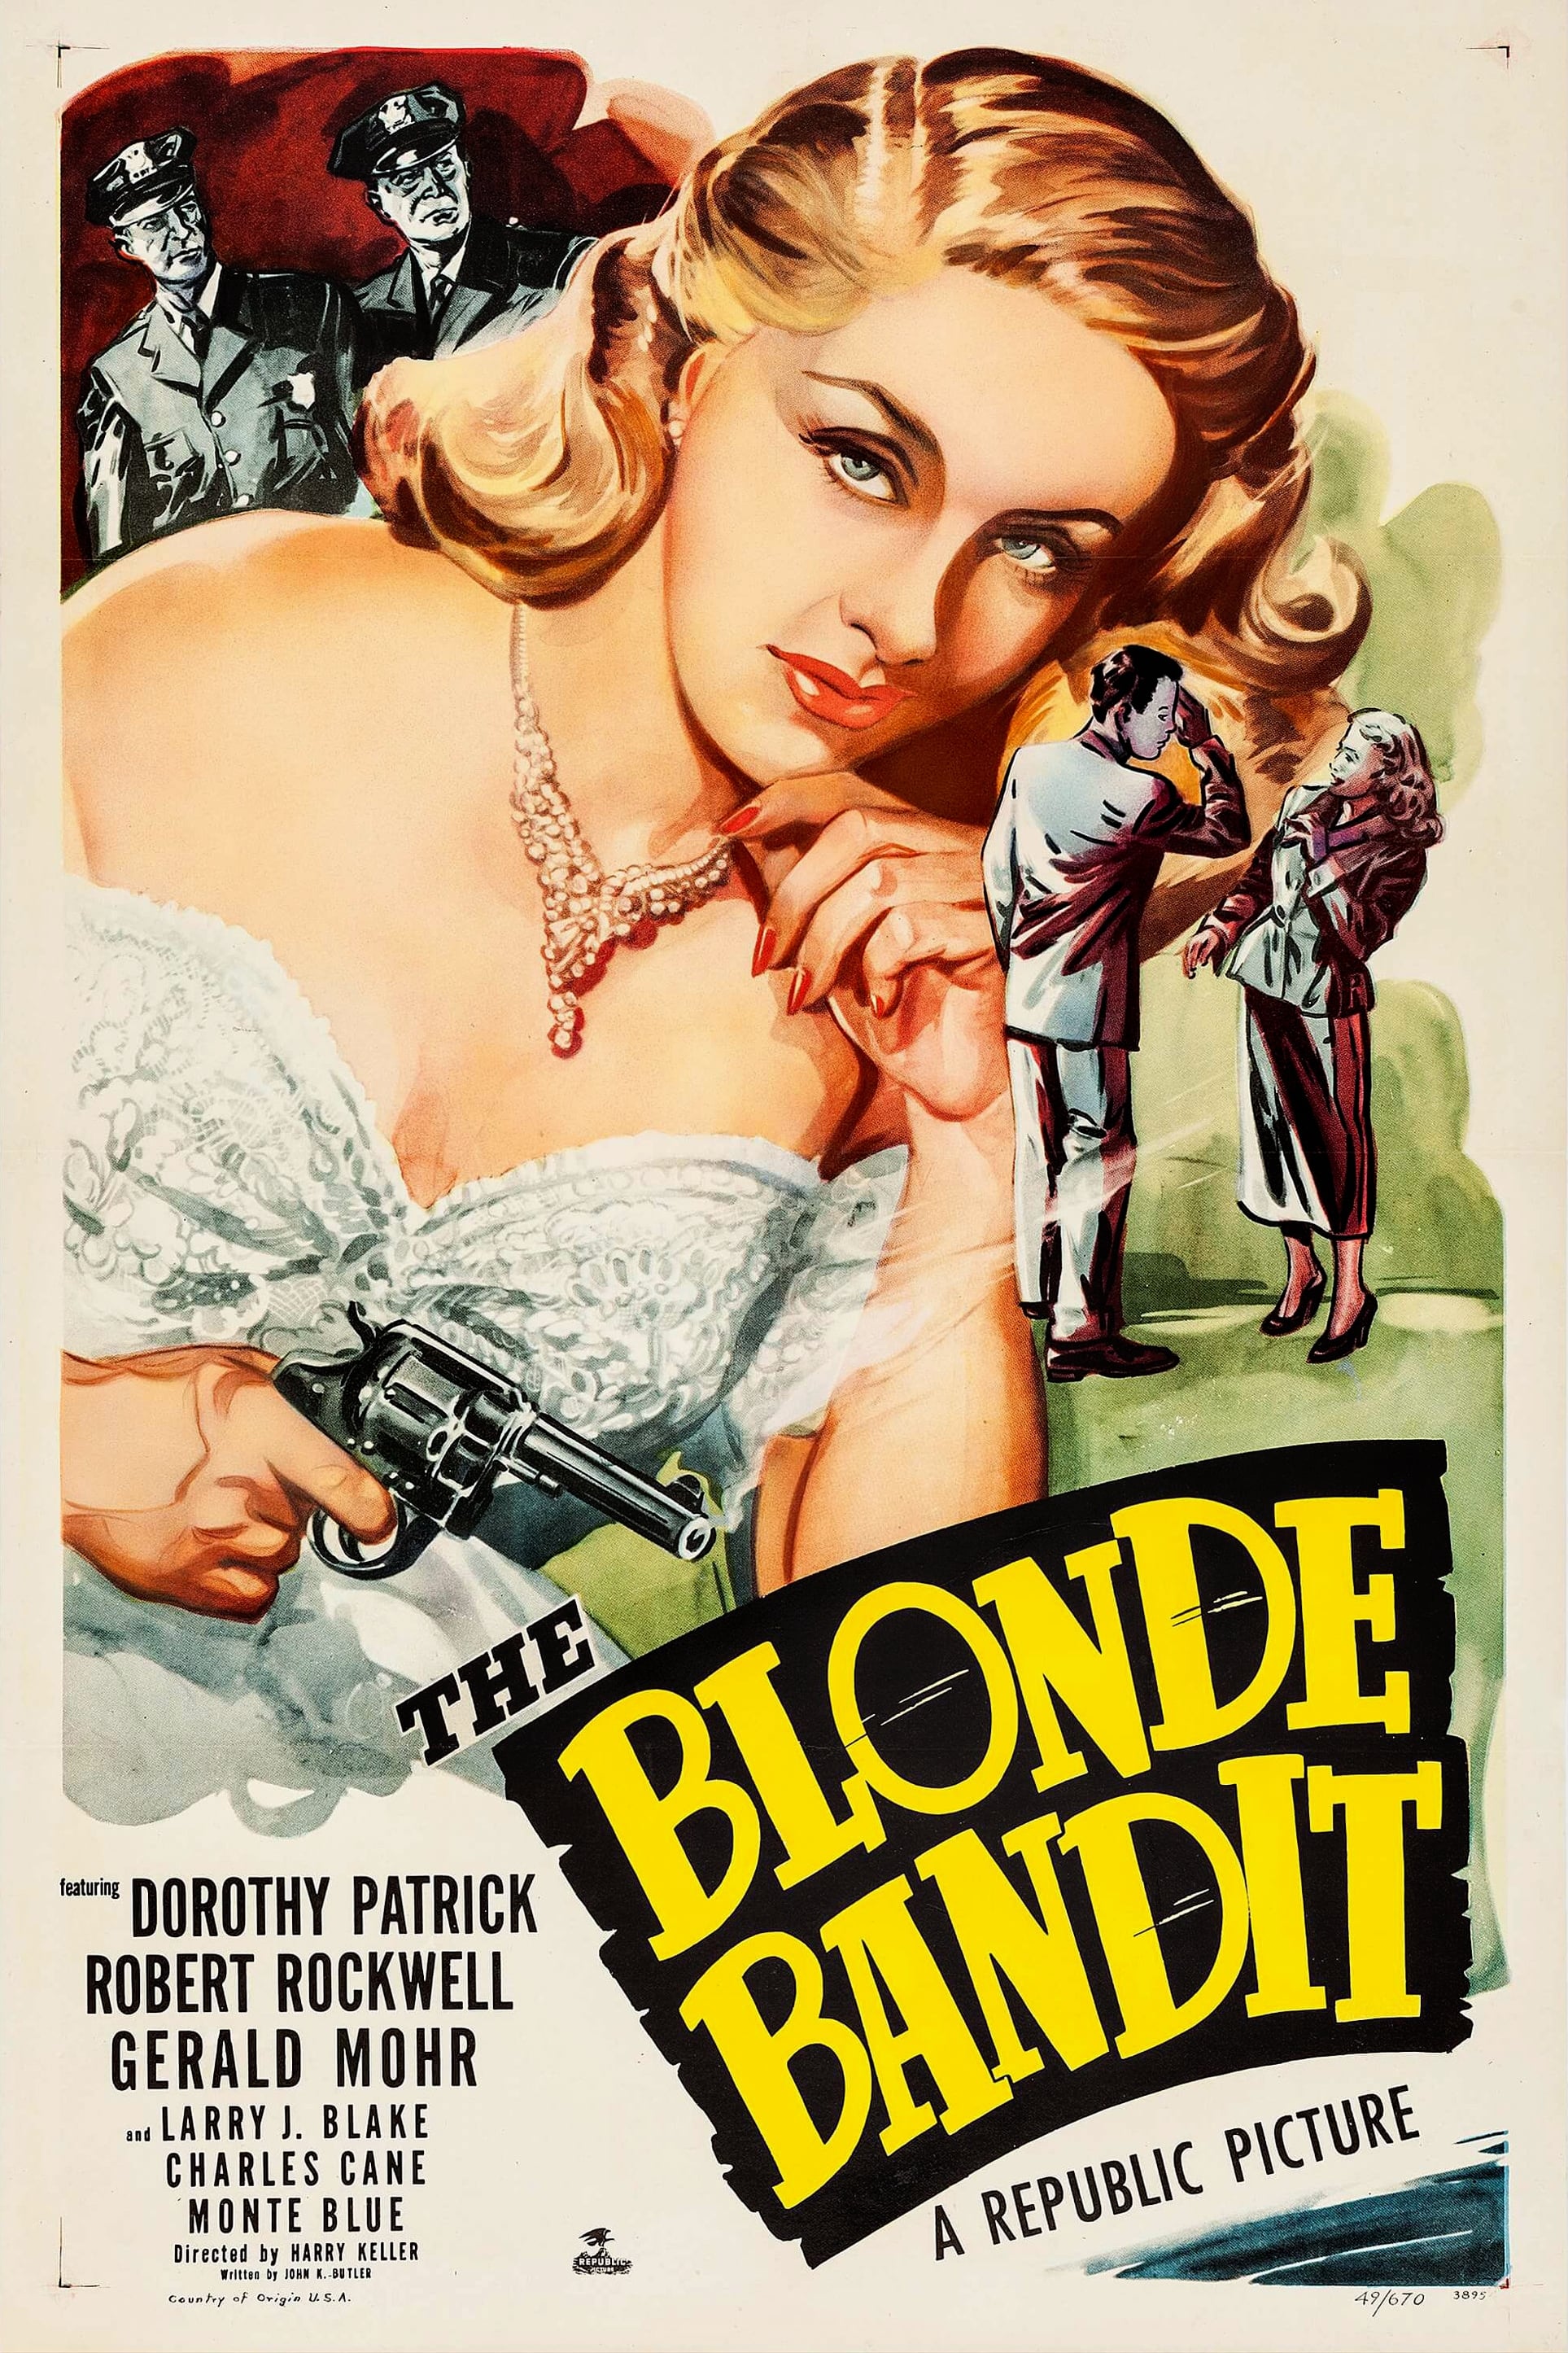 The Blonde Bandit (1950)